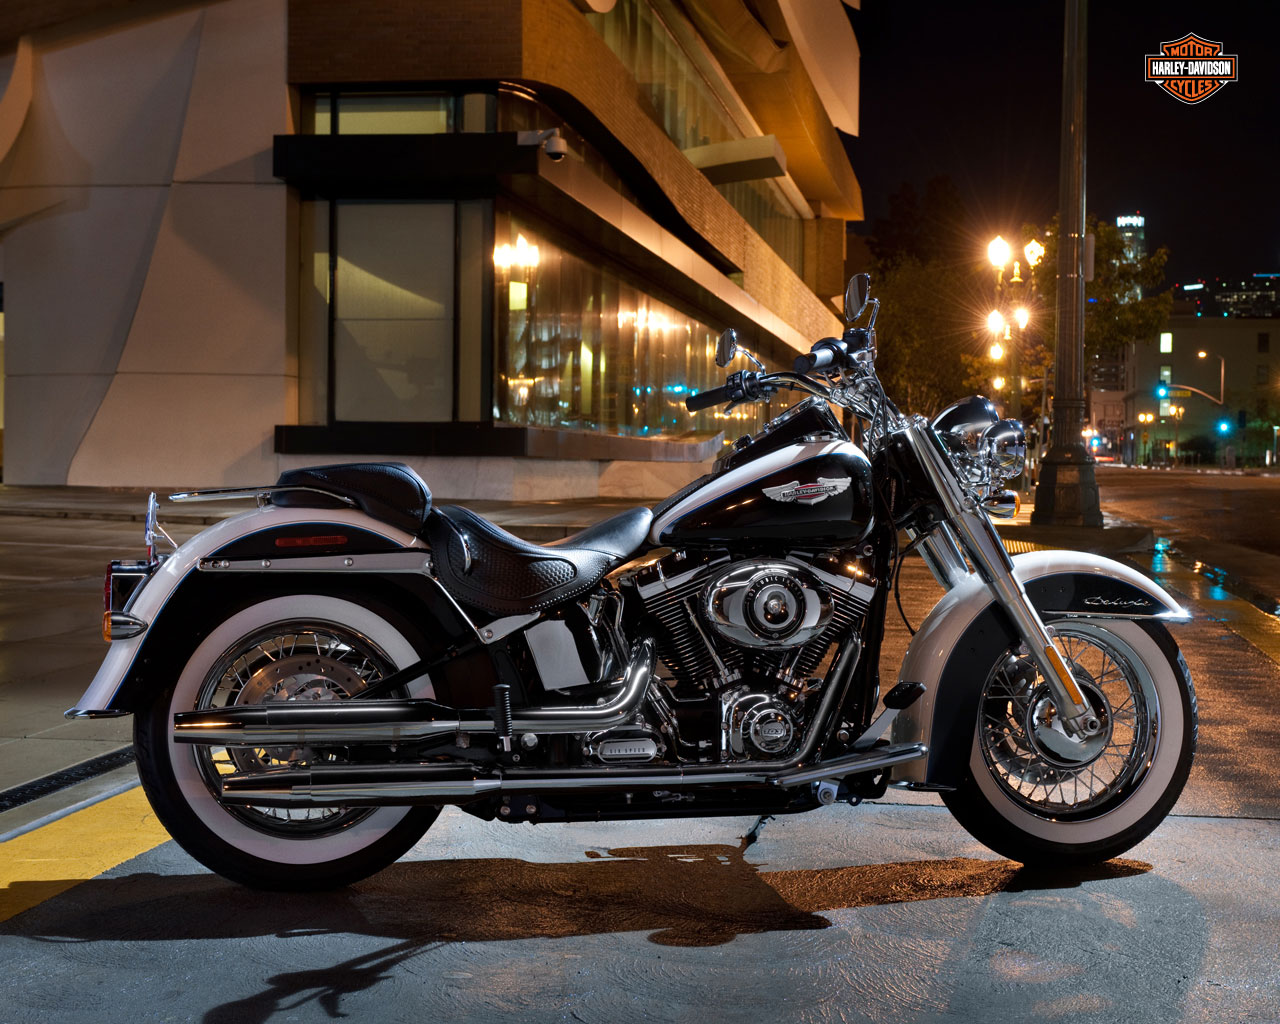 2012 Harley Davidson Flstn Softail Deluxe Review